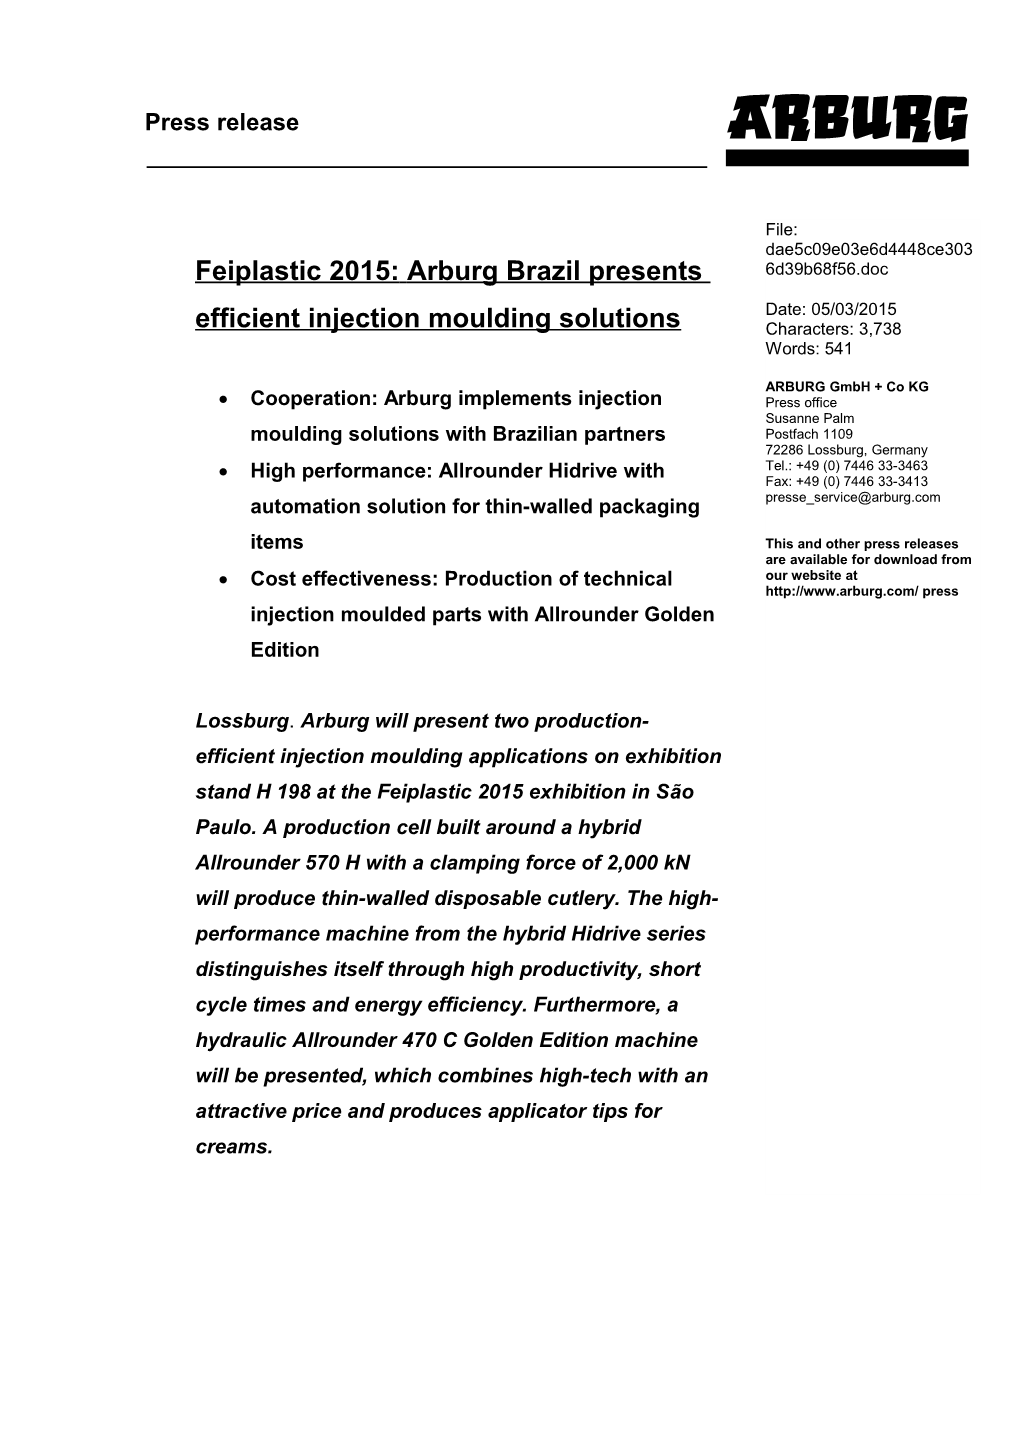 Feiplastic 2015:Arburg Brazil Presents Efficient Injection Moulding Solutions